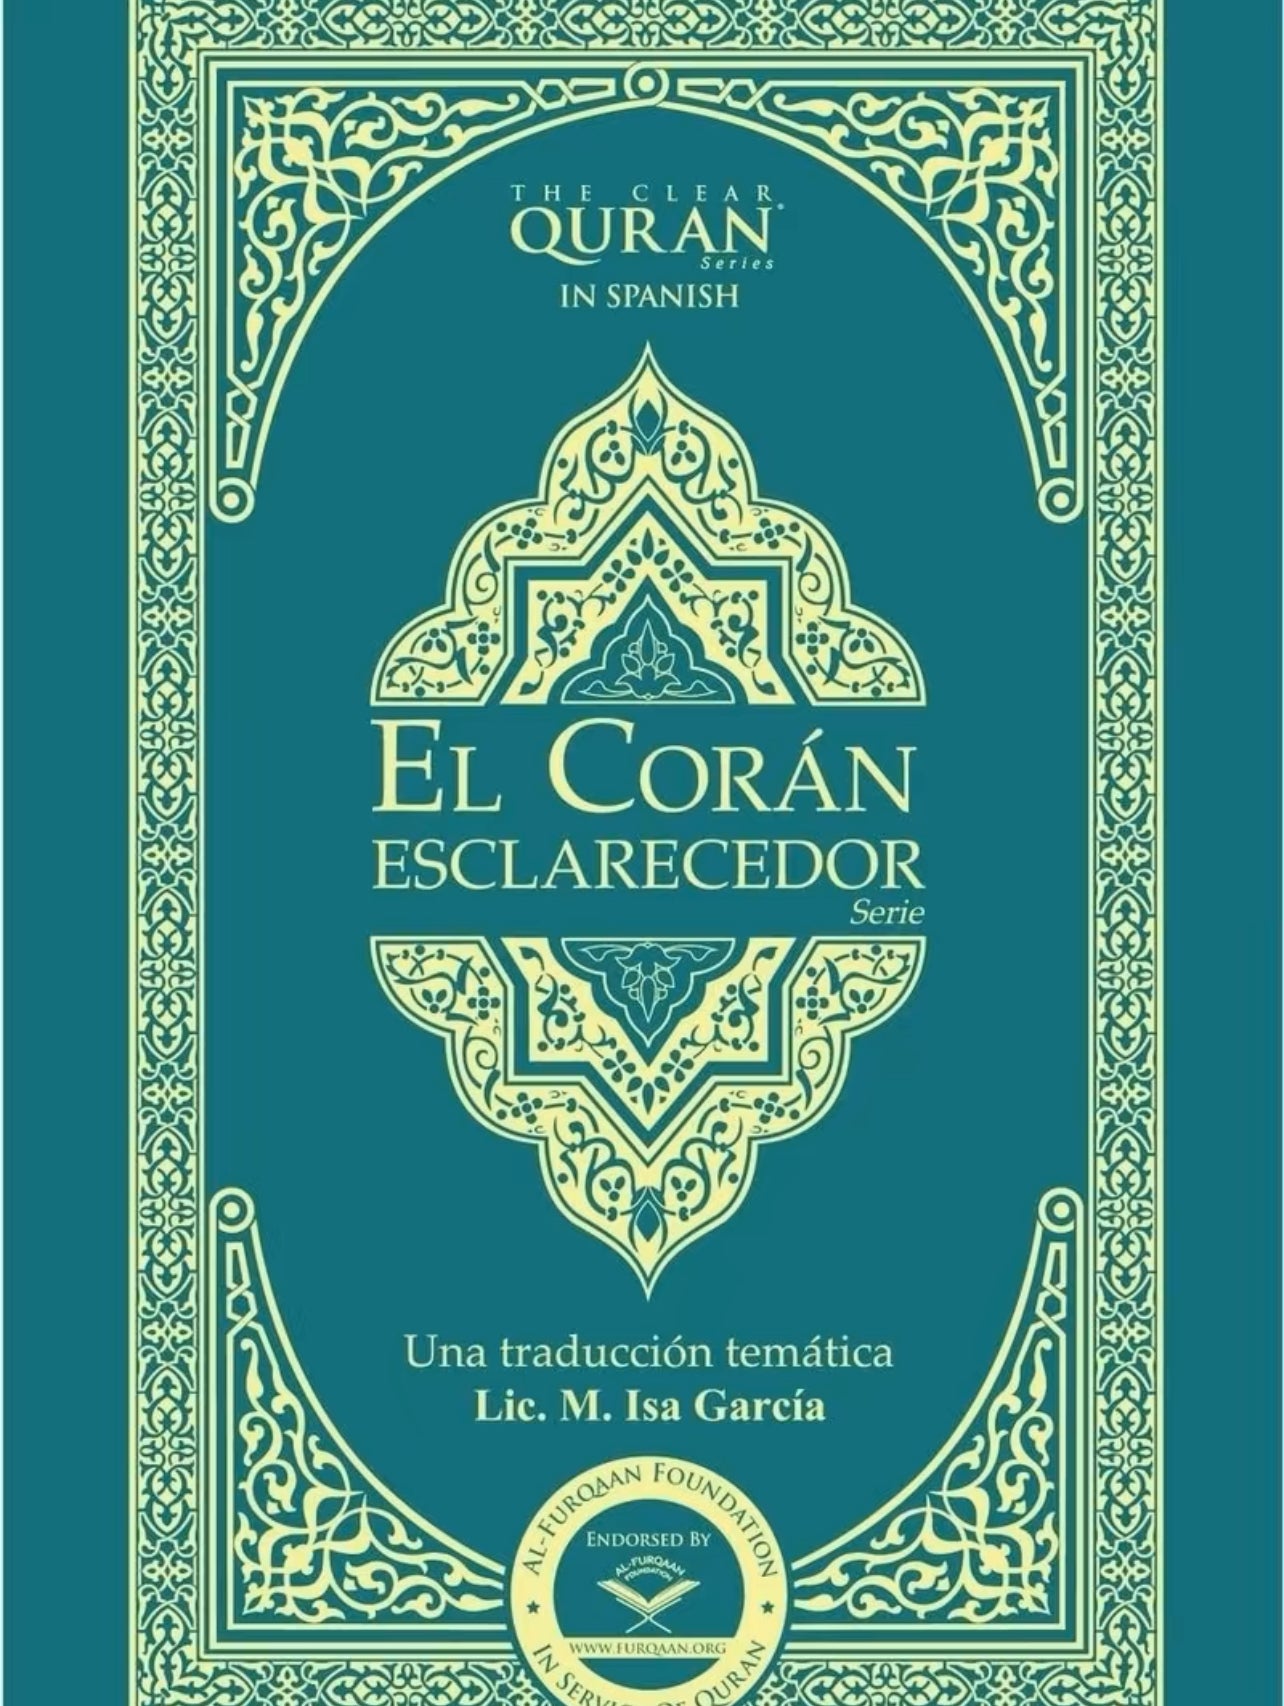 The Clear Quran Spanish Translation